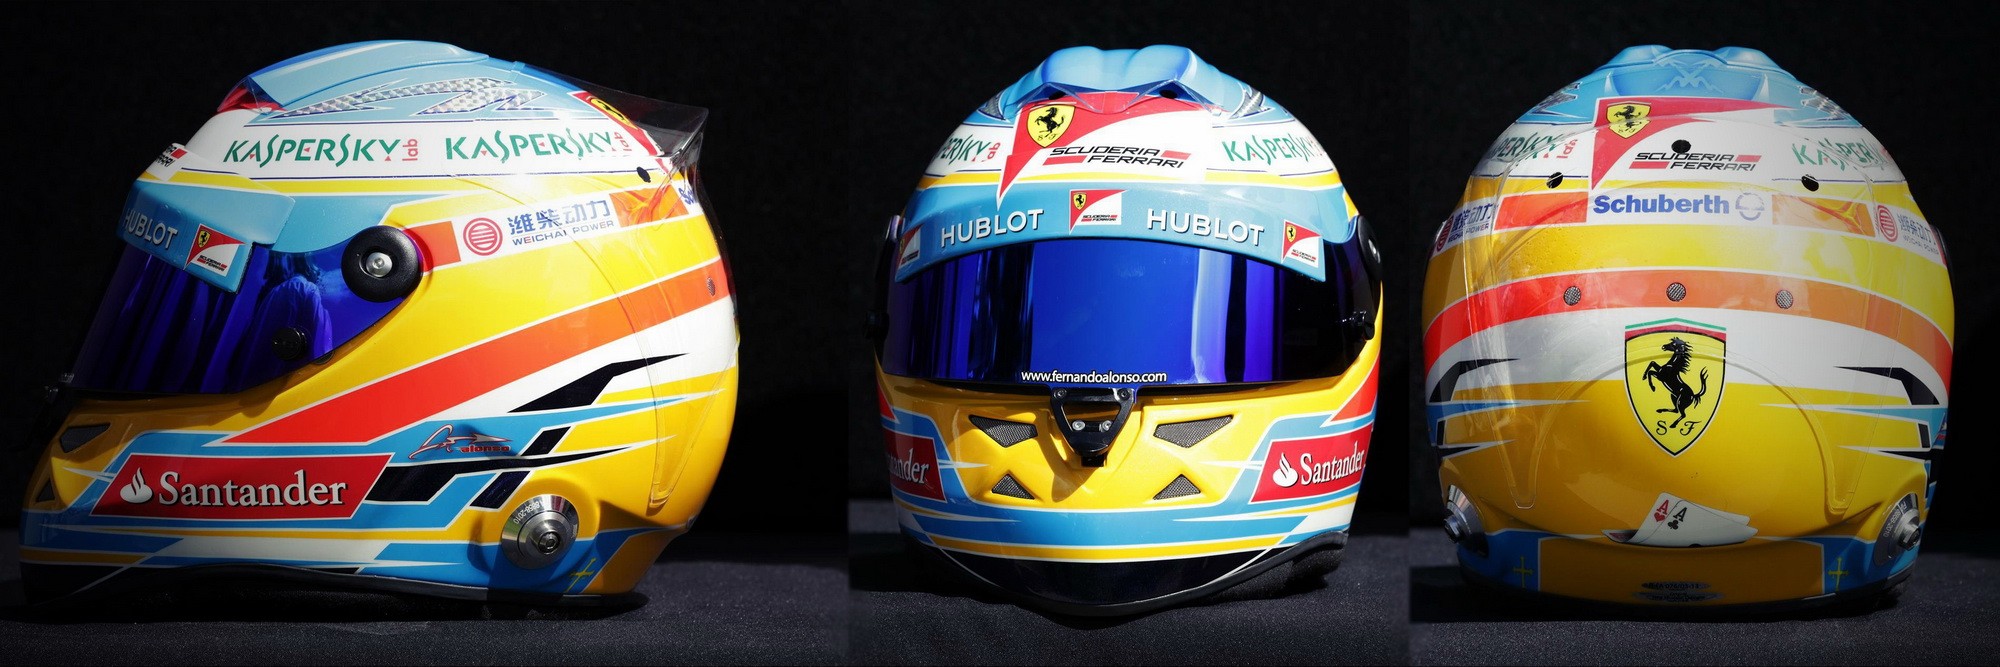 Шлем Фернандо Алонсо на сезон 2013 года | 2013 helmet of Fernando Alonso